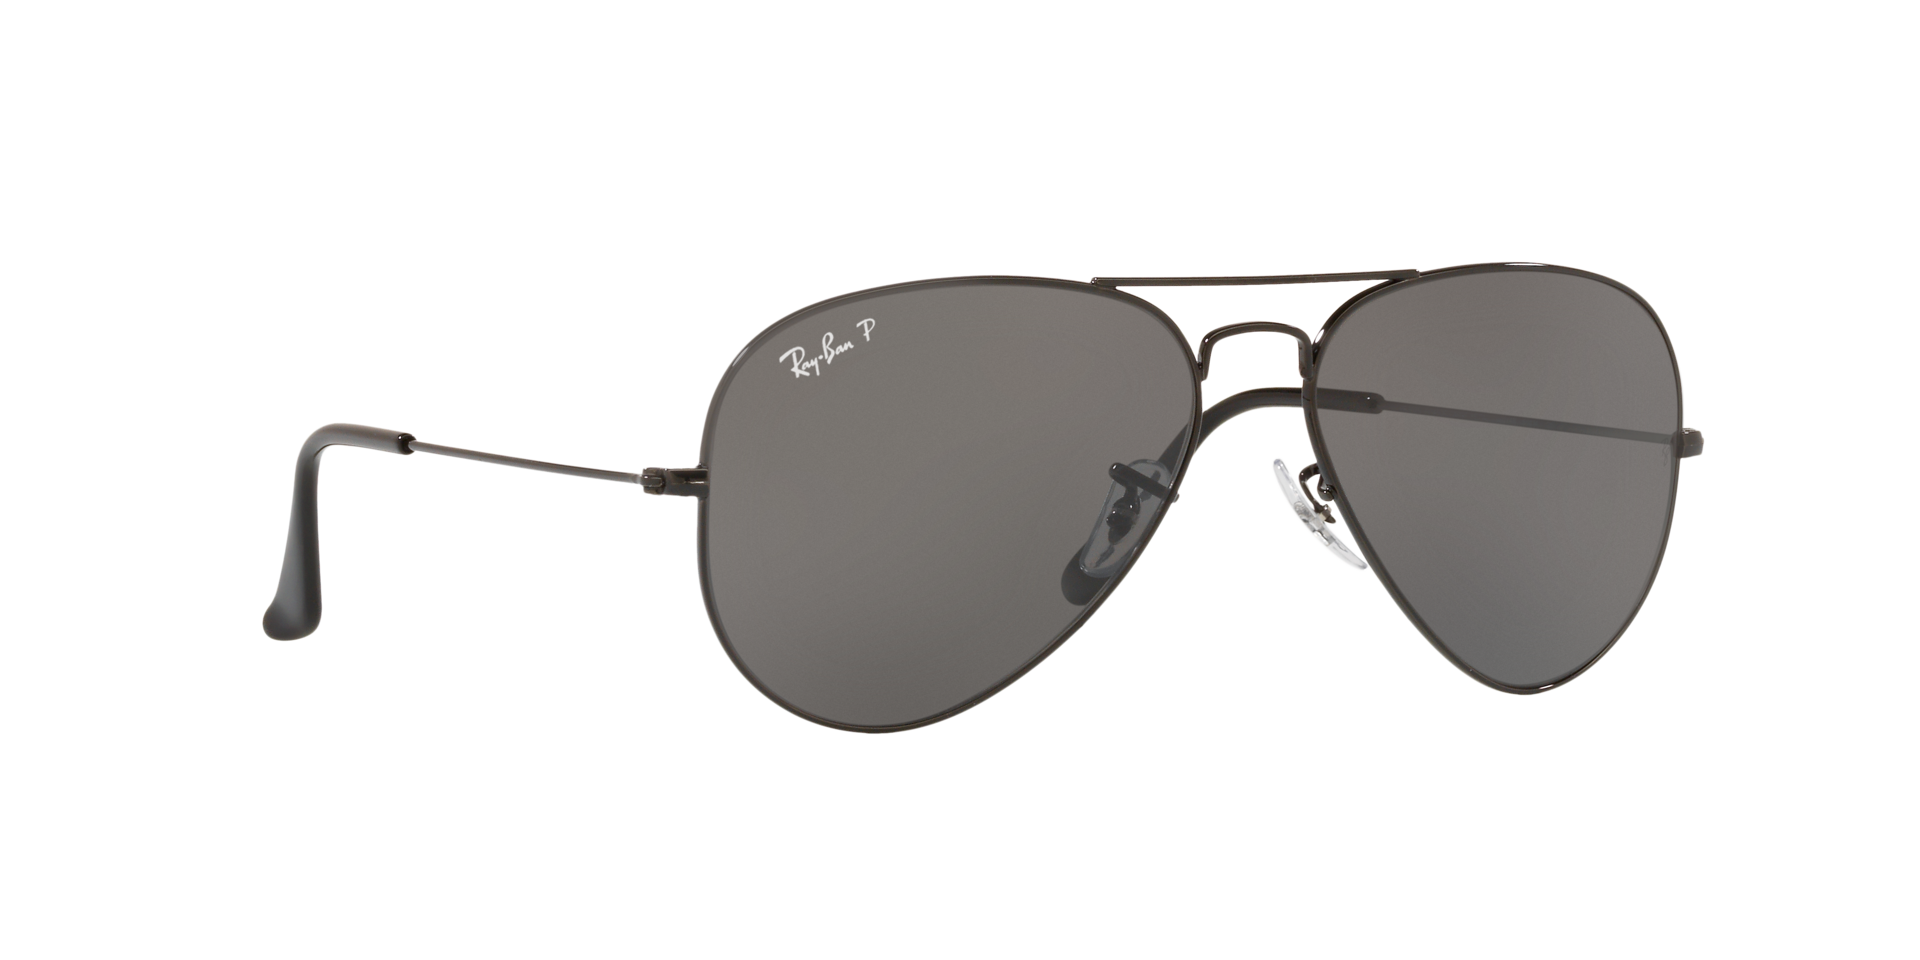 Buy Ray-Ban Aviator Total Black Sunglasses Online.